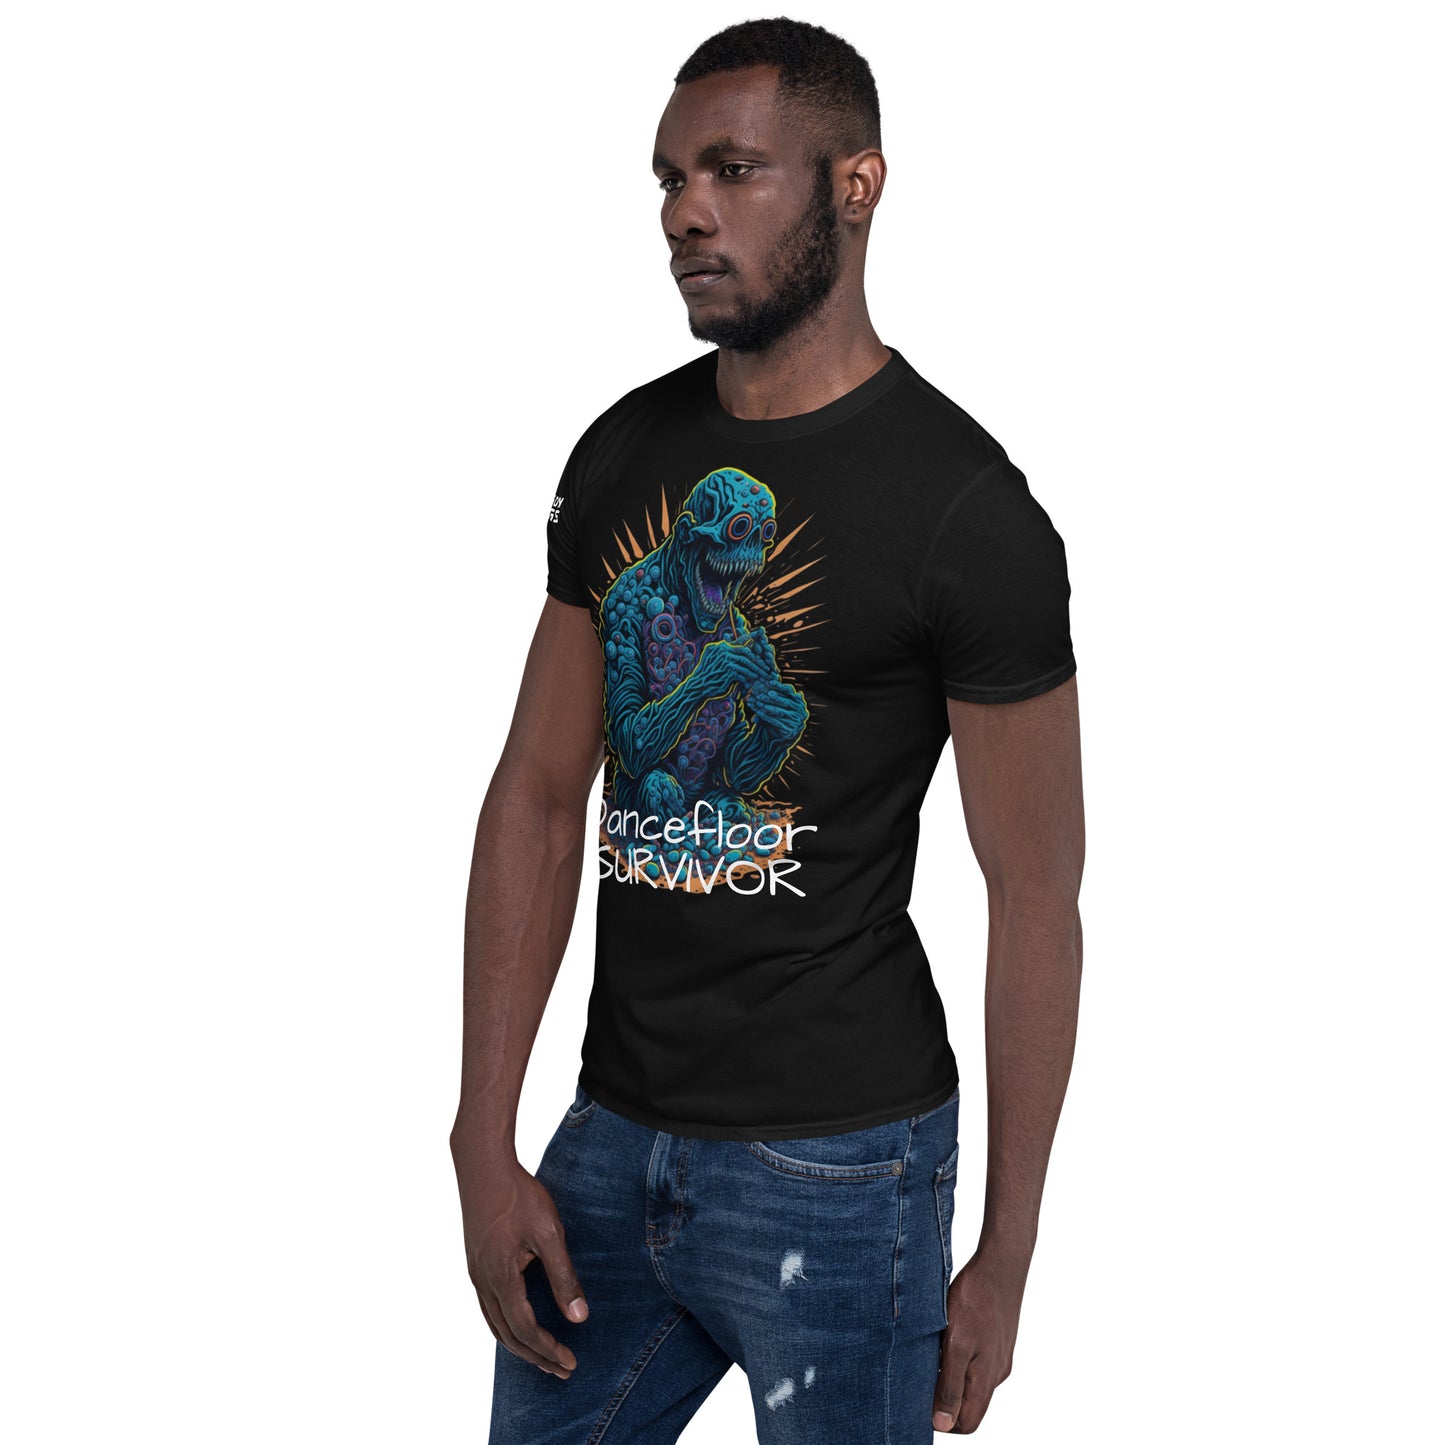 Dancefloor Survivor - Unisex T-Shirt, Ecstasy Edition